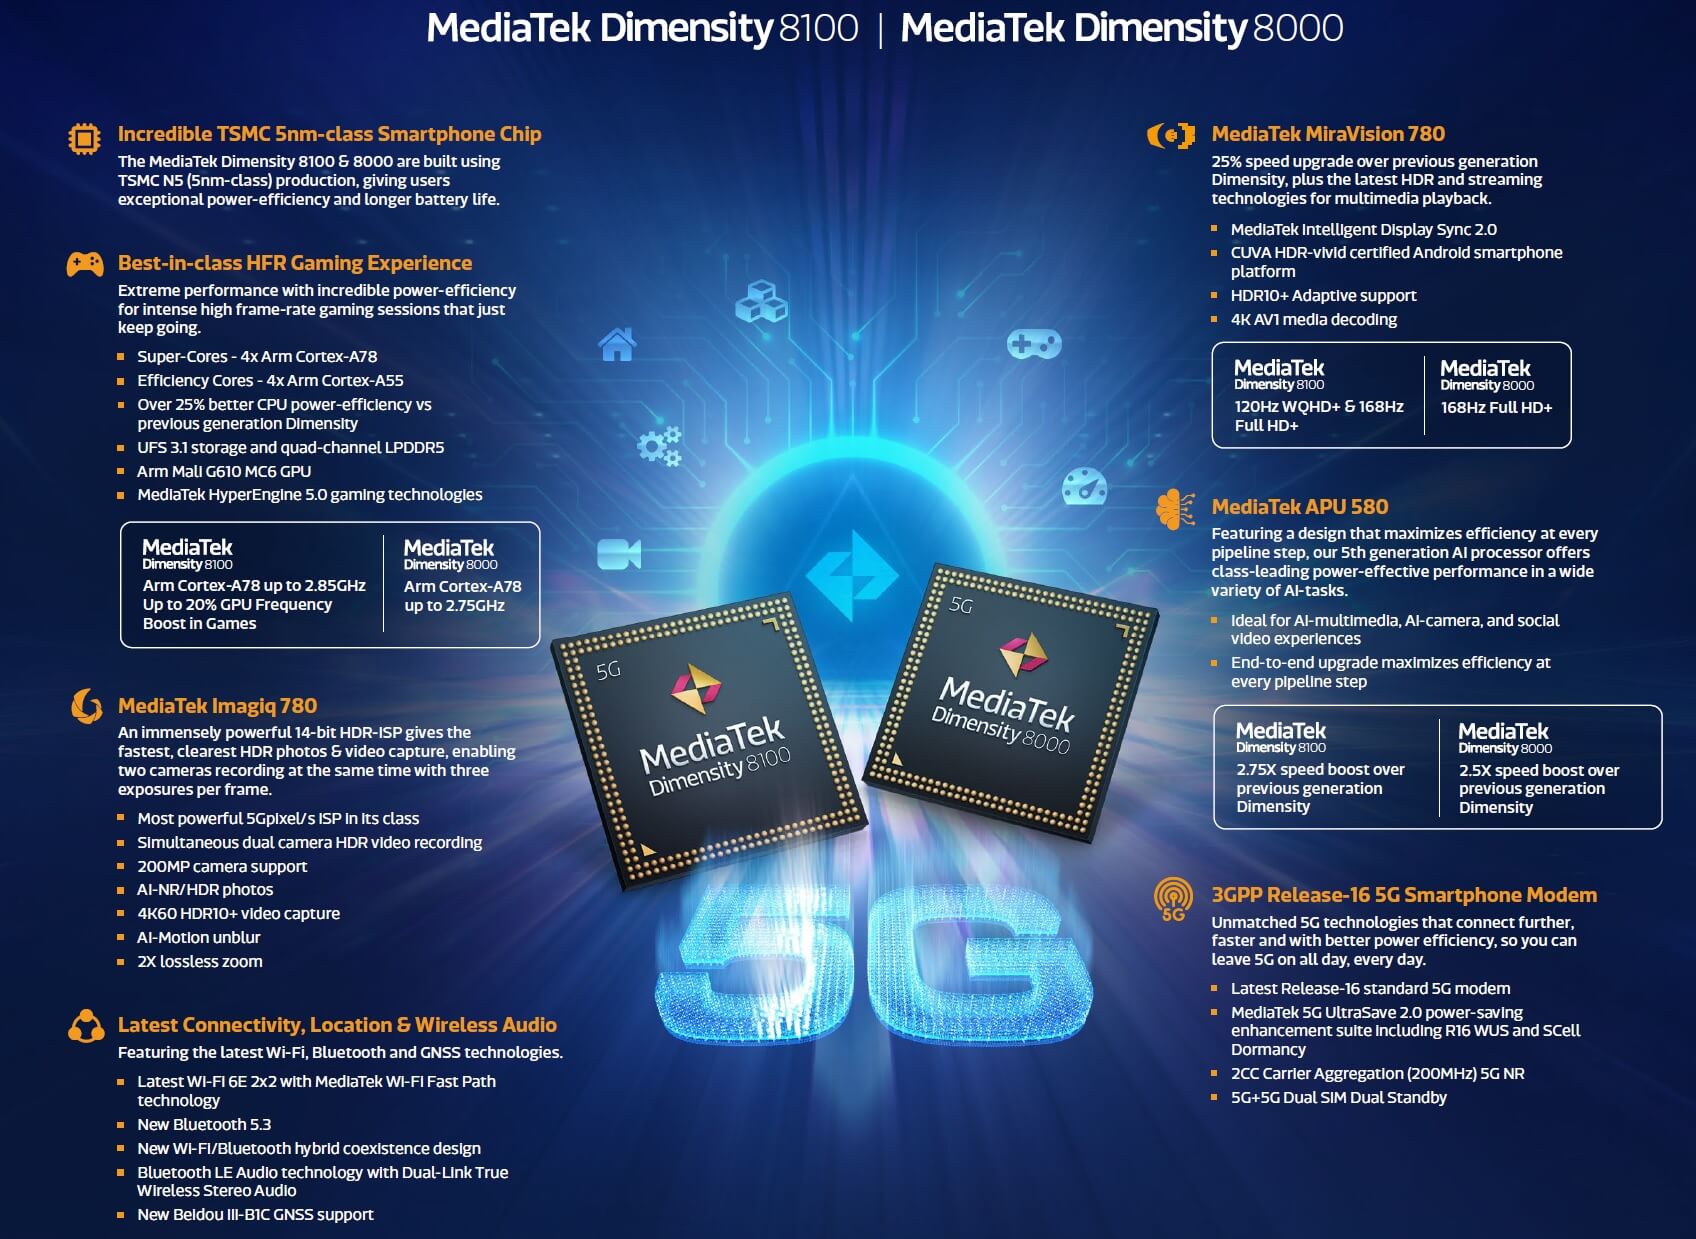 MediaTek Dimensity 8100 and Dimensity 8100 features